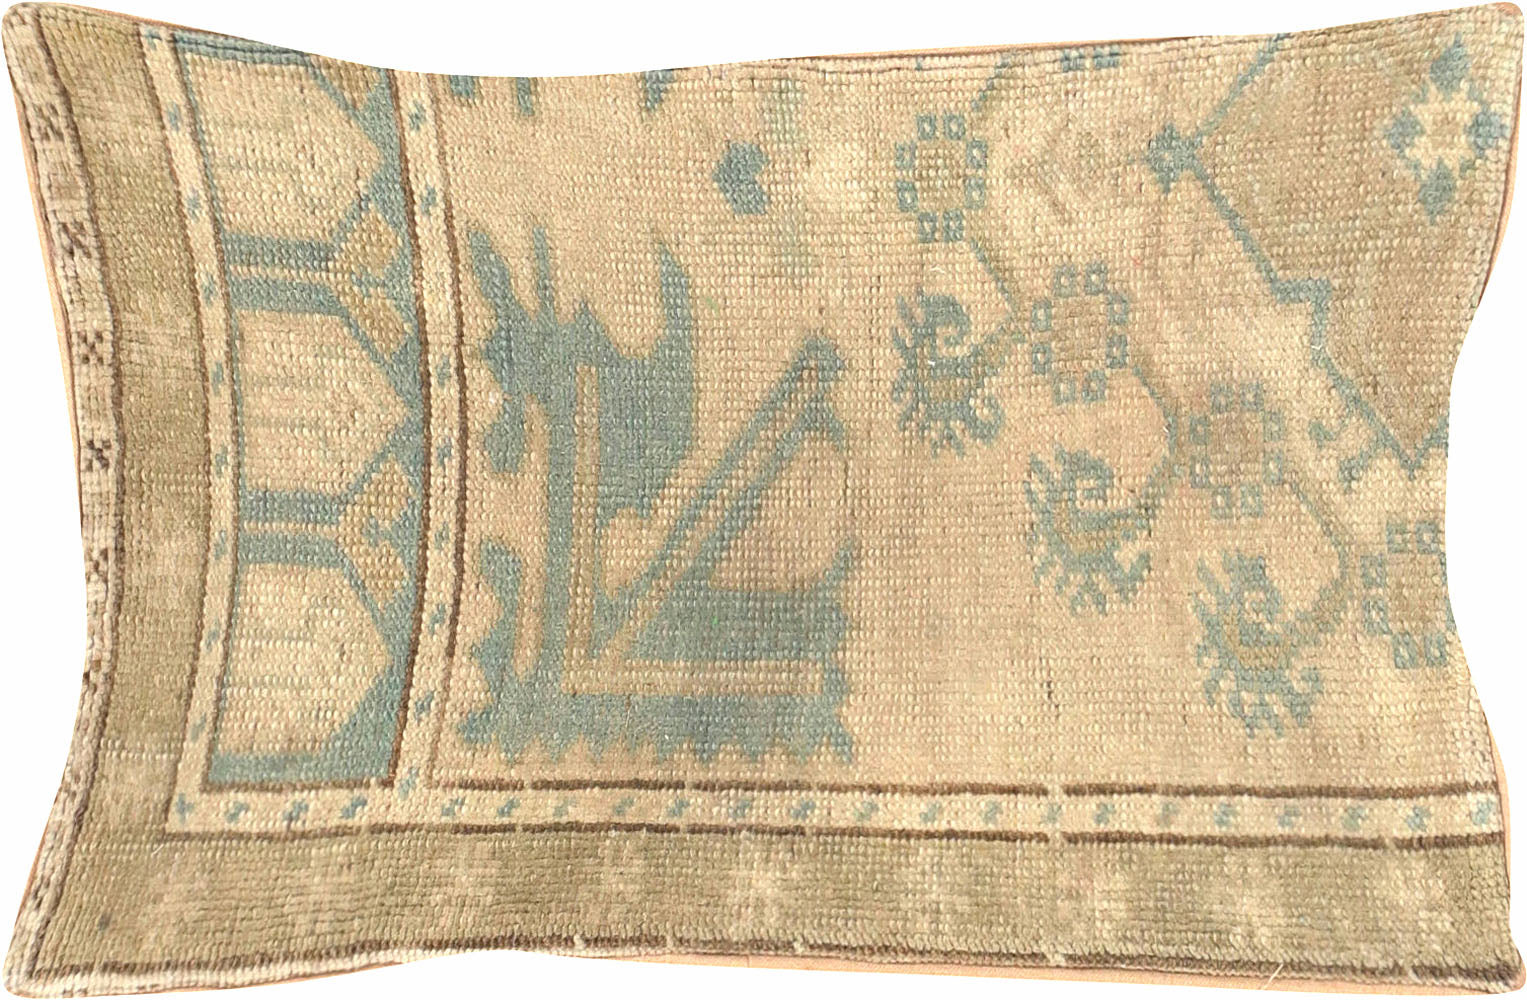 Vintage Turkish Oushak Pillow - 12" x 24"